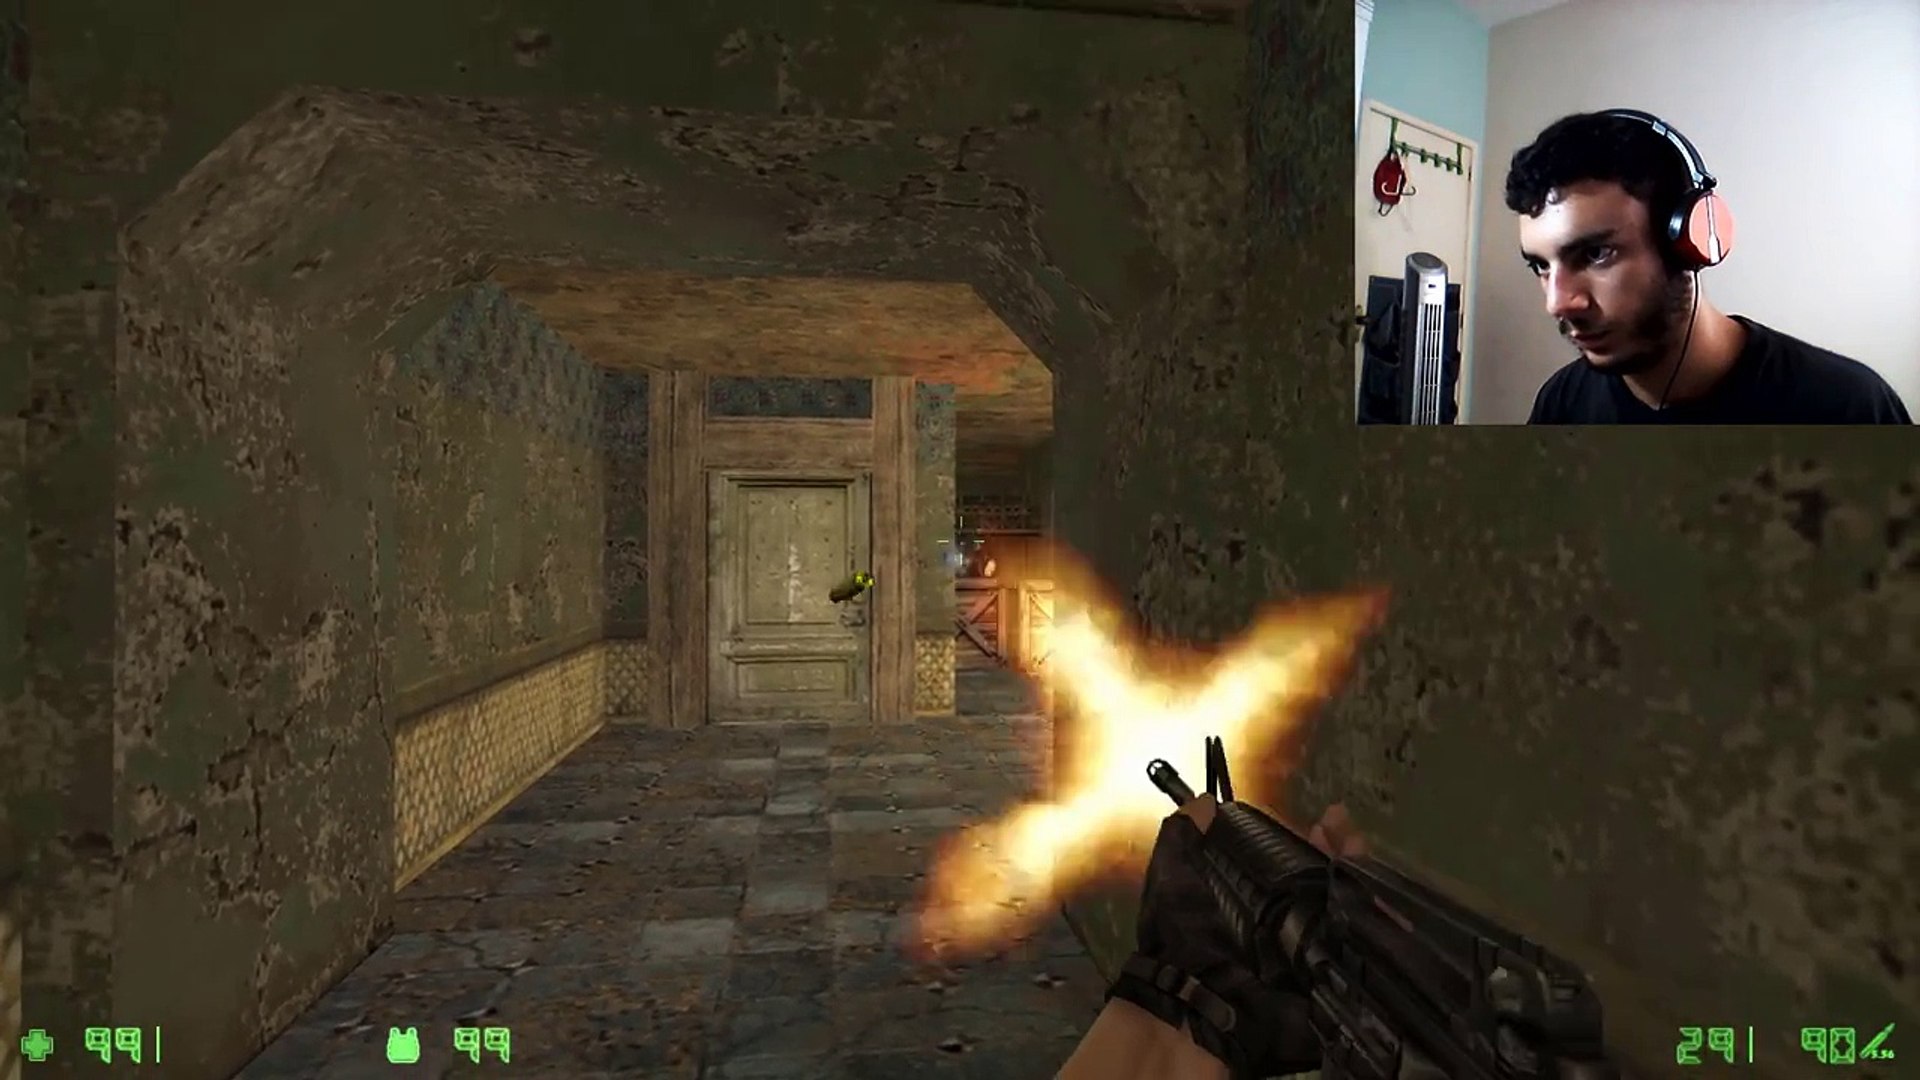 Counter-Strike: Condition Zero Deleted Scenes - Walkthrough